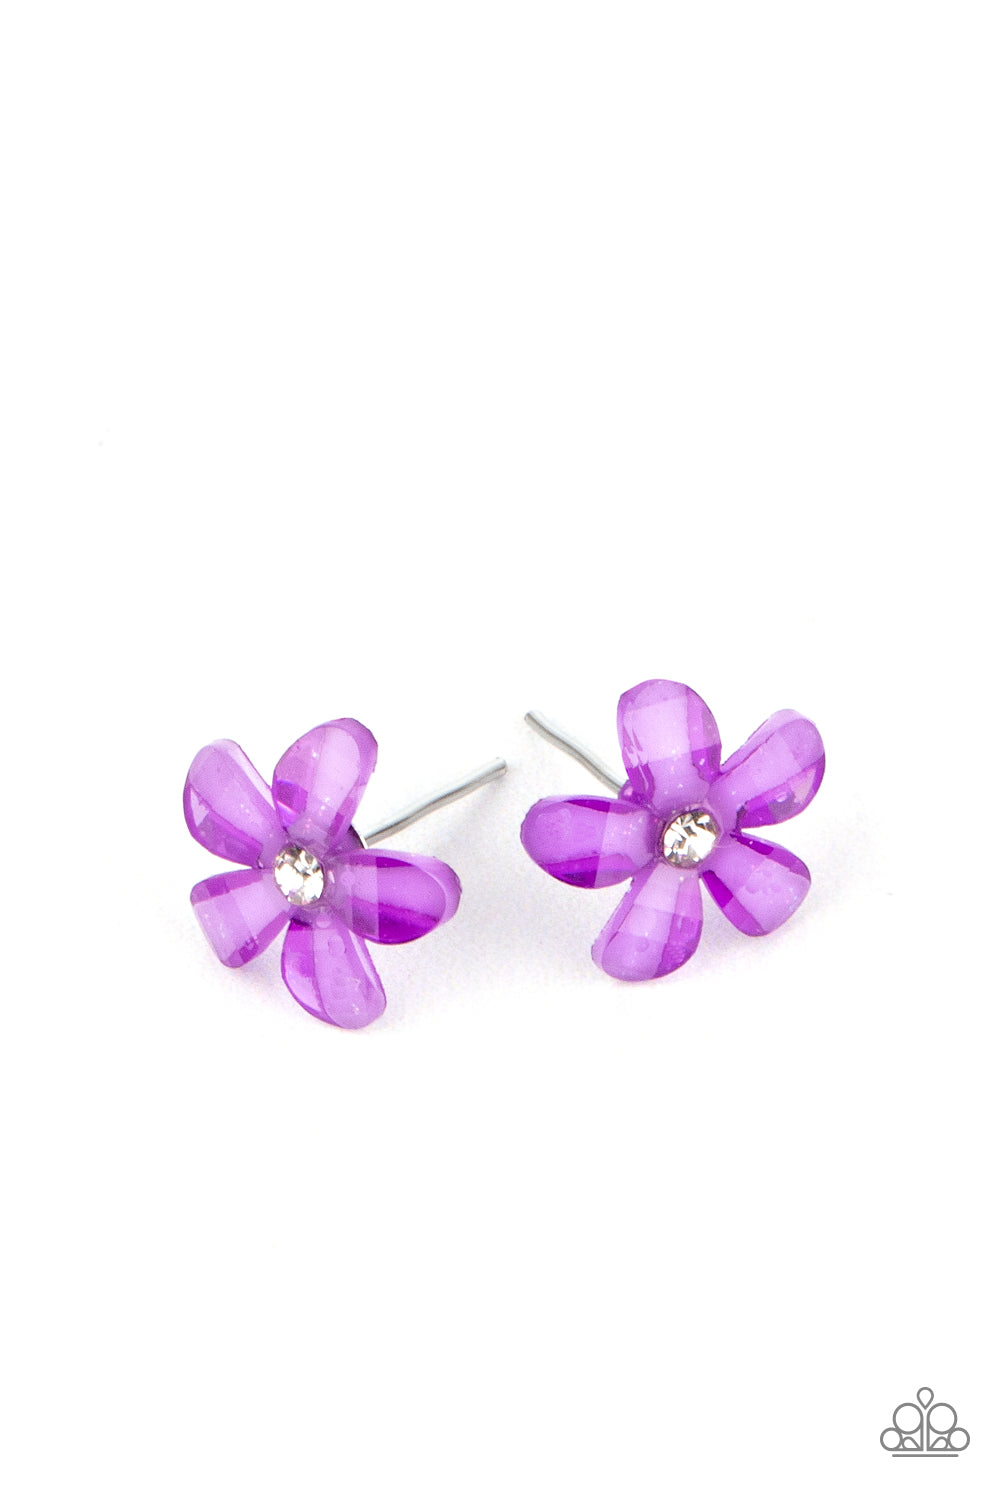 Starlet Shimmer Floral Frames Earring Kit freeshipping - JewLz4u Gemstone Gallery